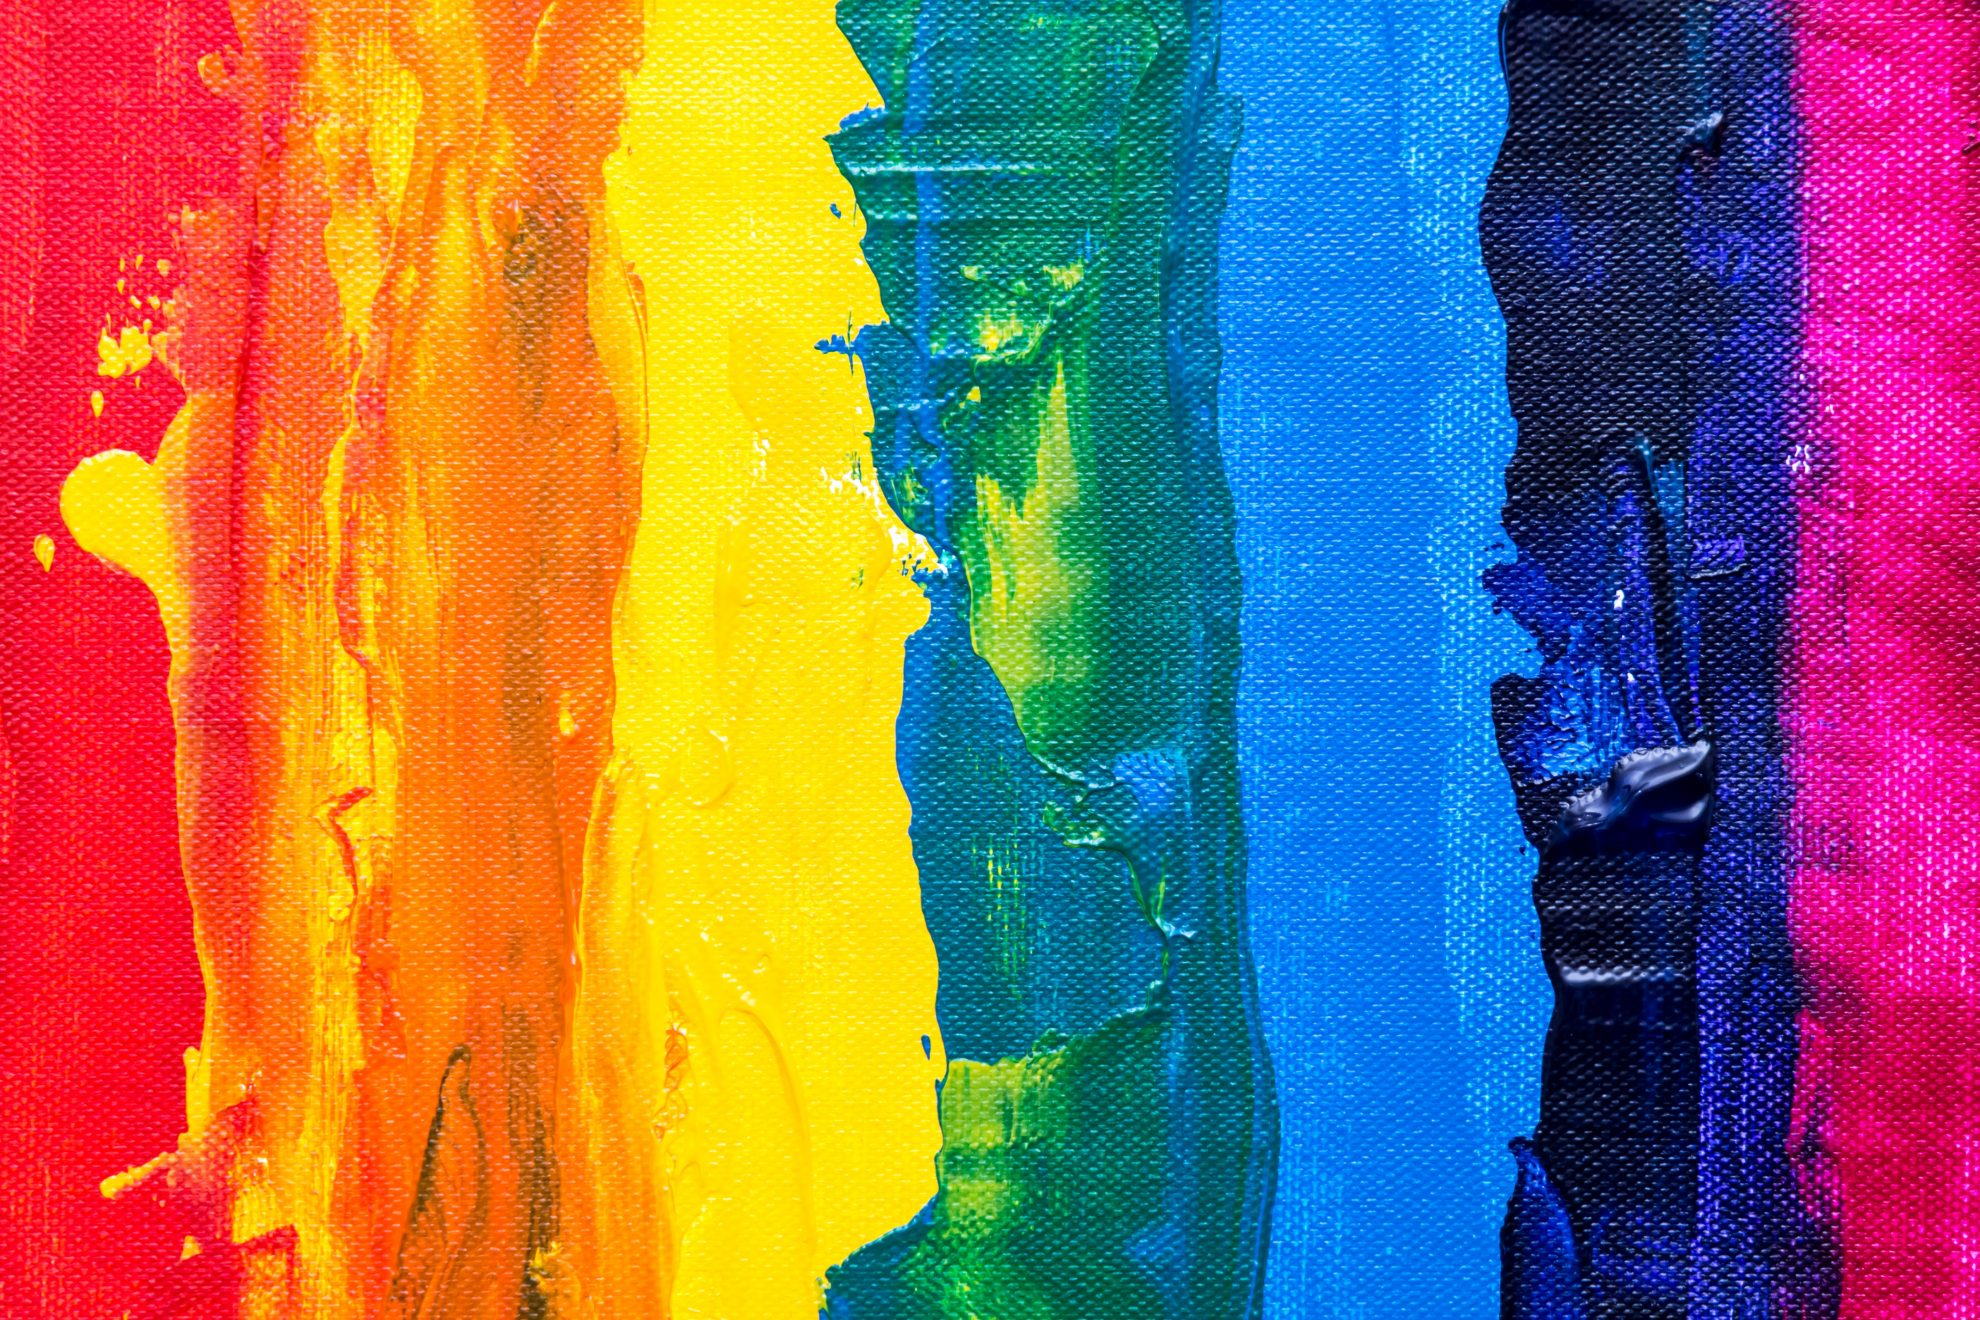 Acrylbild in Regenbogenfarben